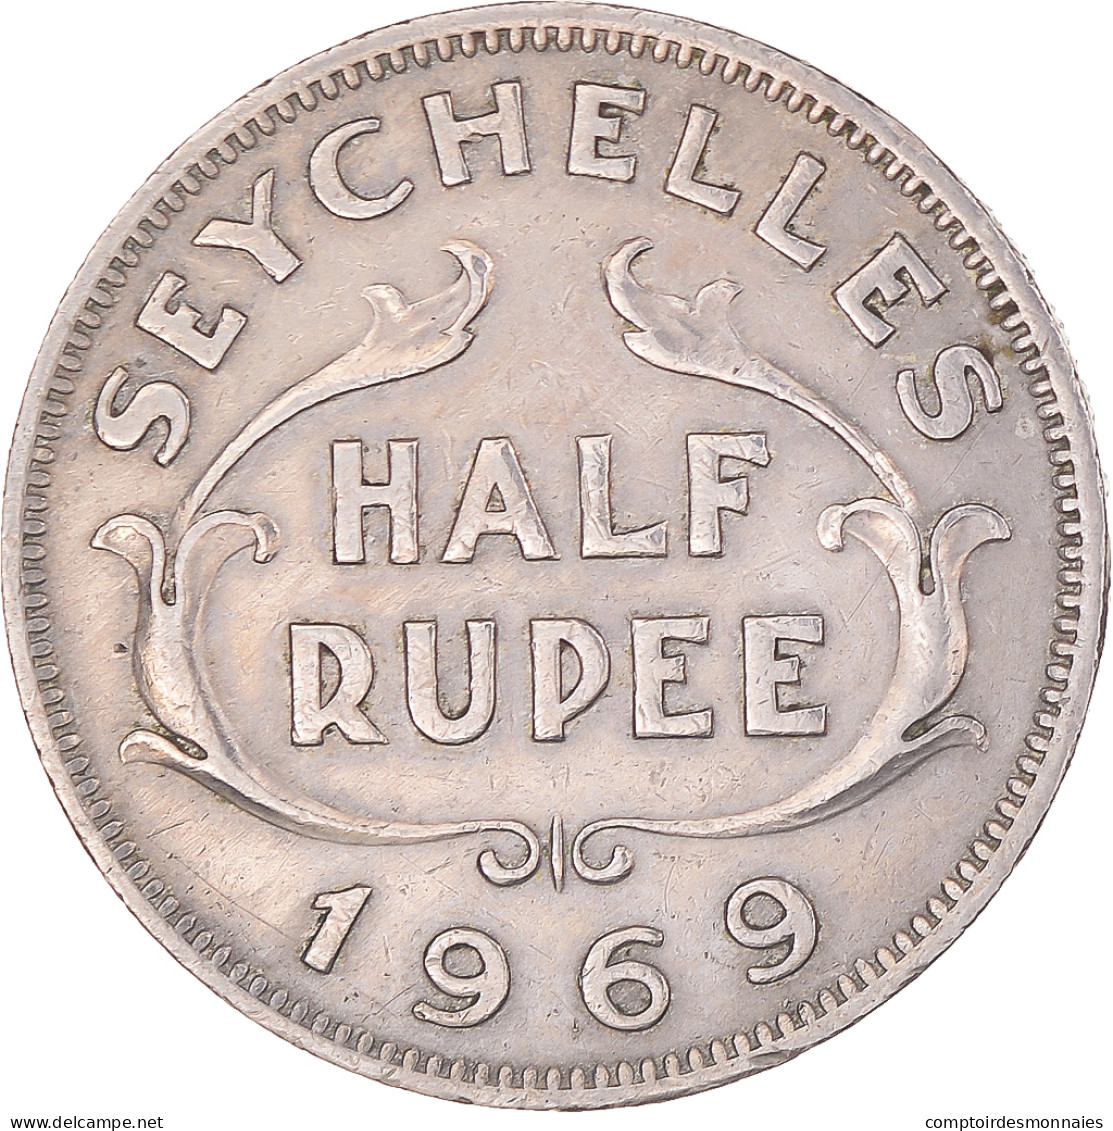 Monnaie, Seychelles, 1/2 Rupee, 1969 - Seychelles